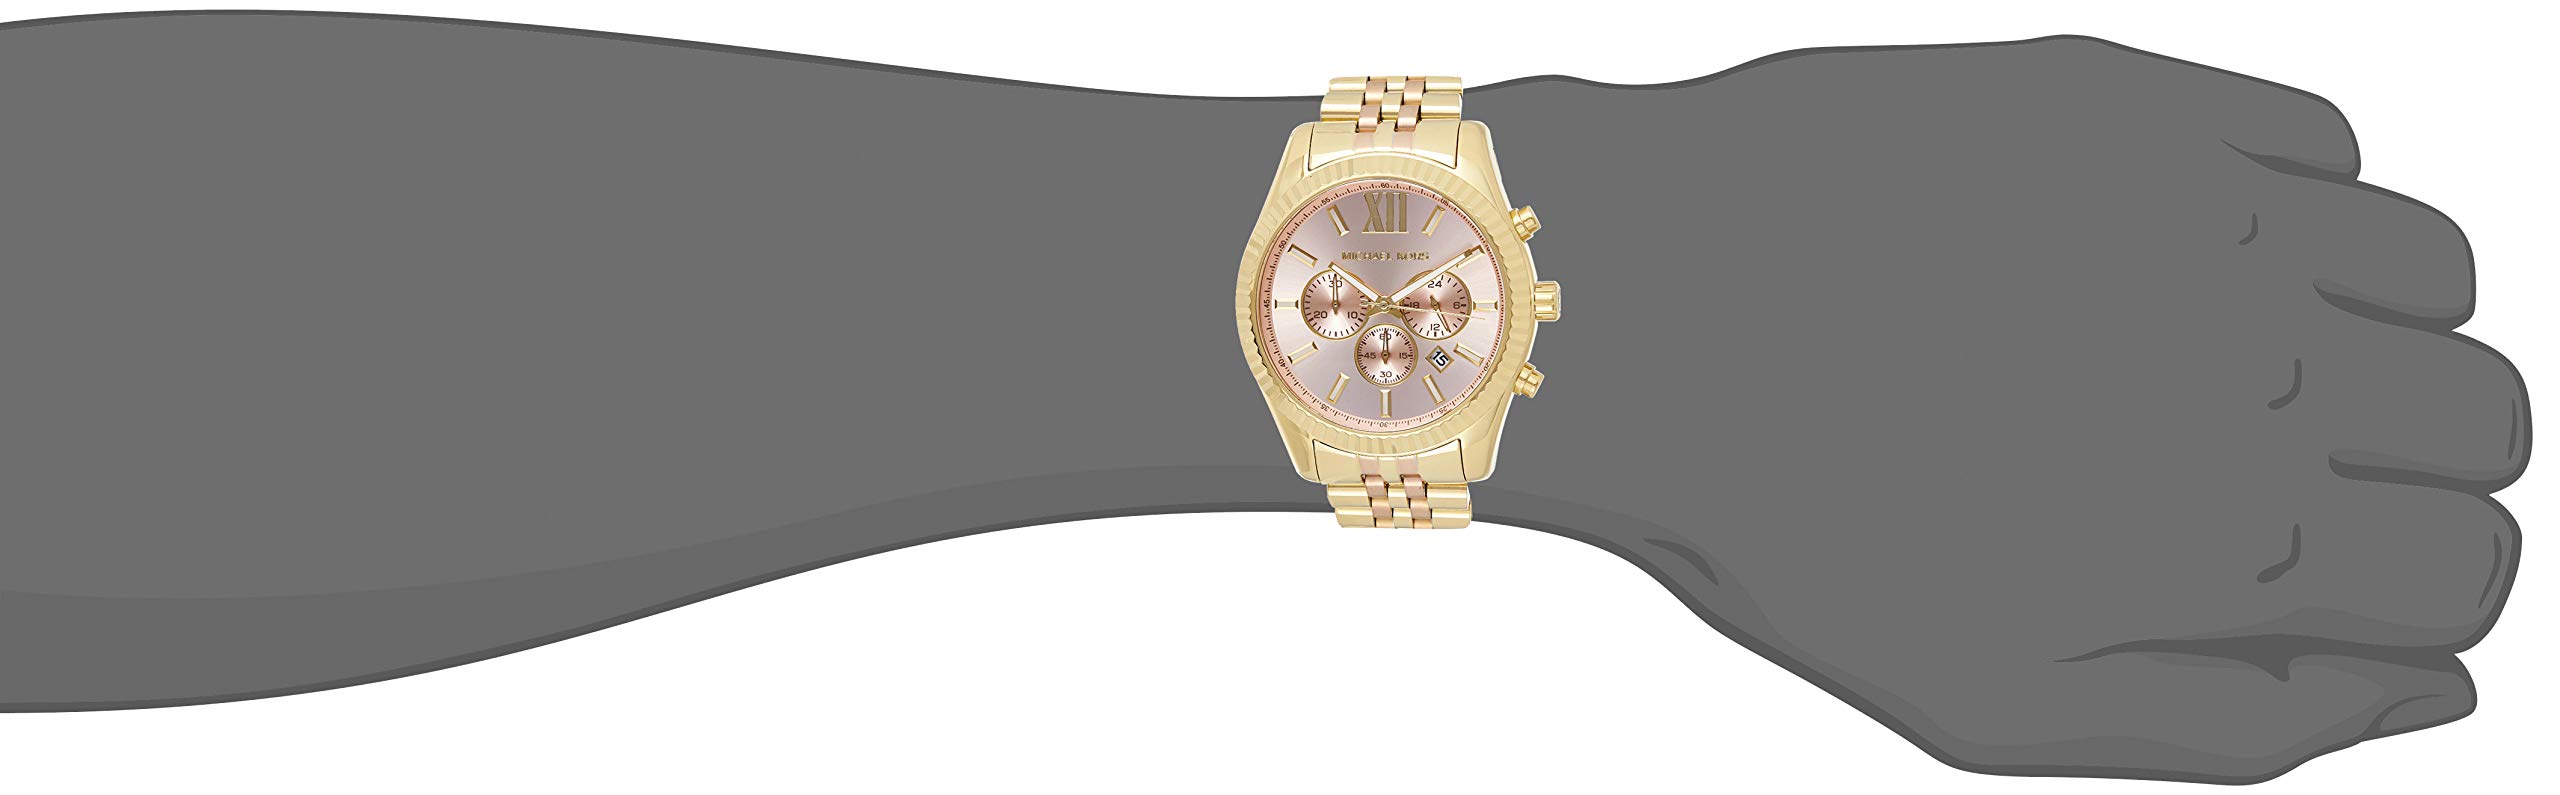 Michael Kors Women's Lexington Gold-Tone Watch MK6473